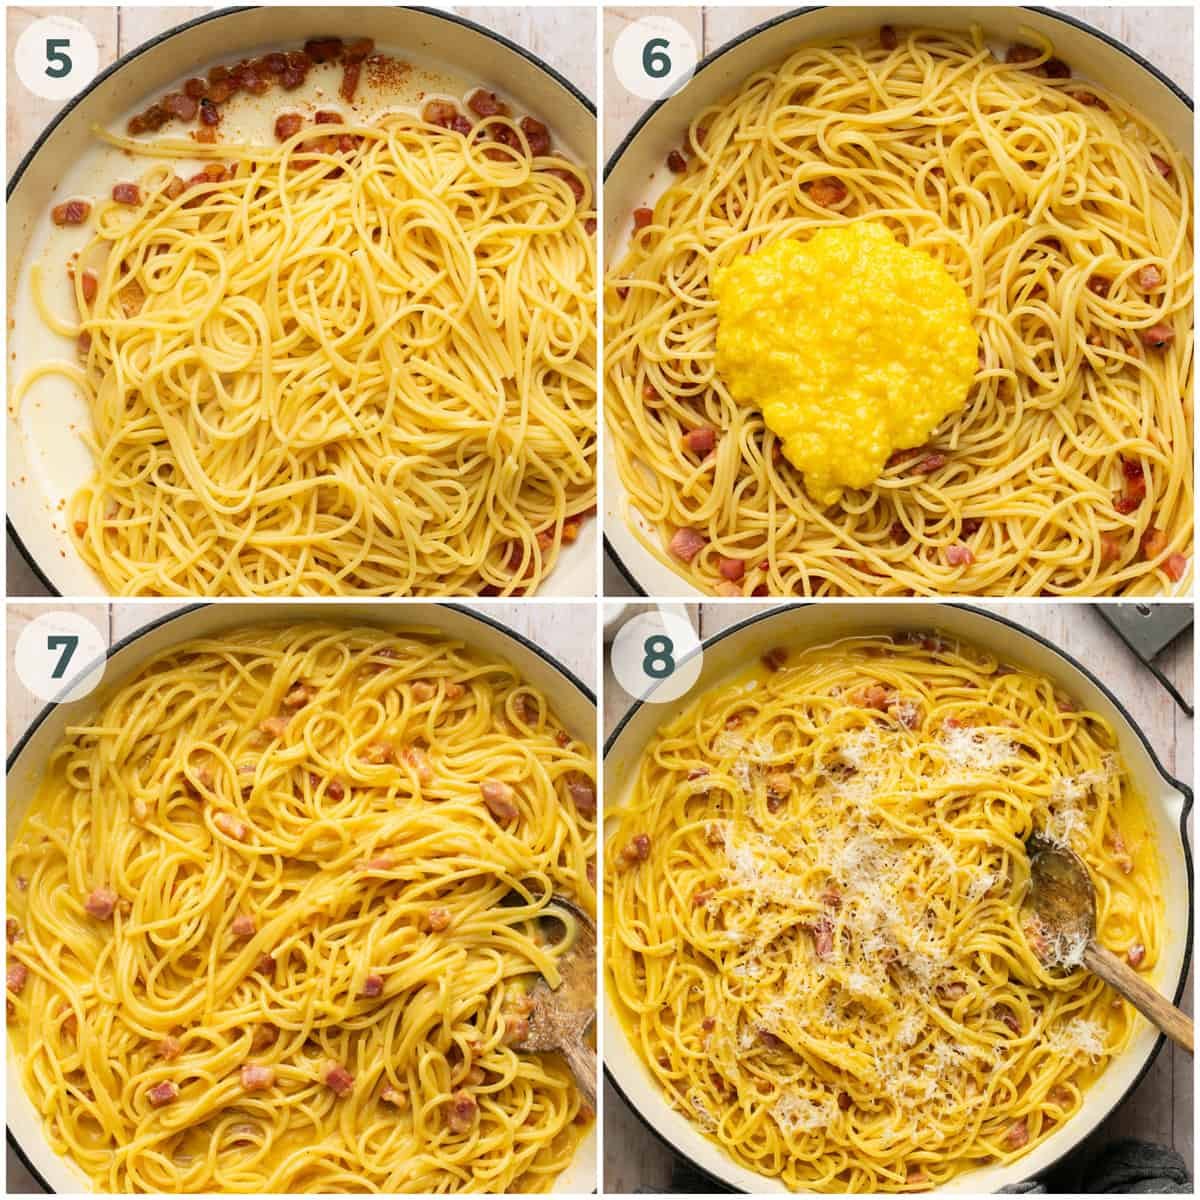 steps 5-8 for spaghetti carbonara recipe